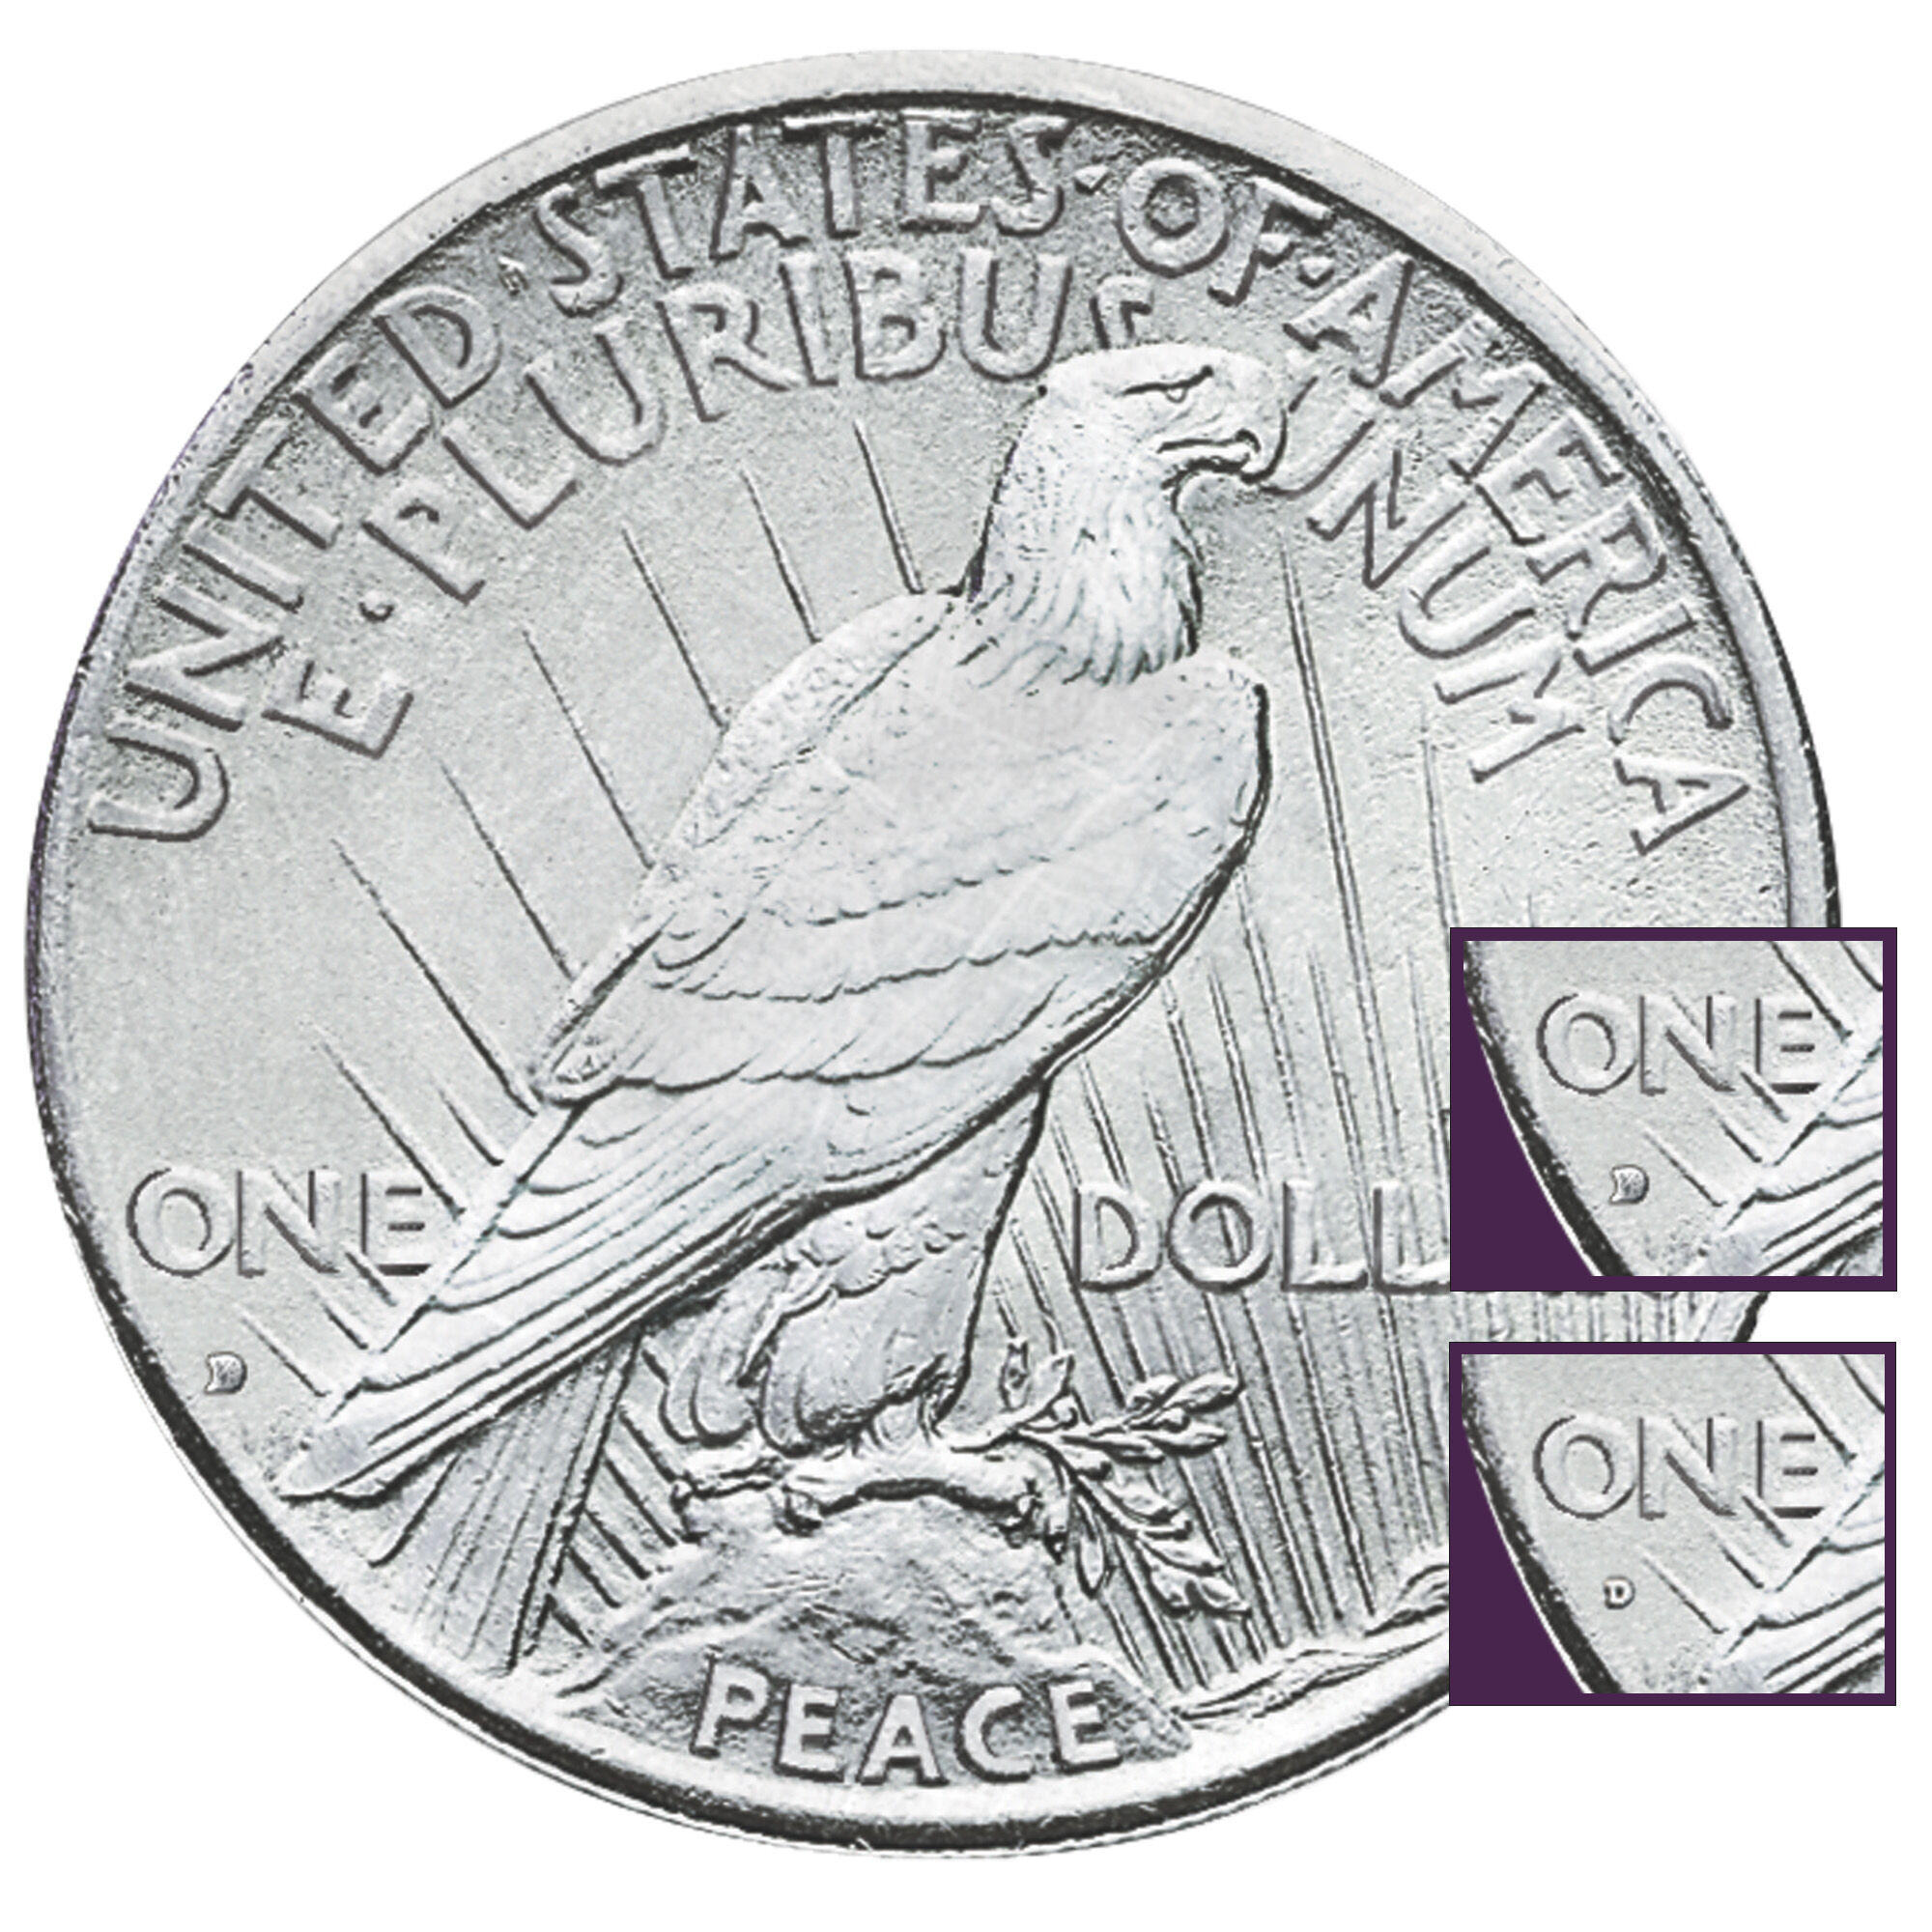 denver mint peace silver dollar mint mark variety set PDV a Main